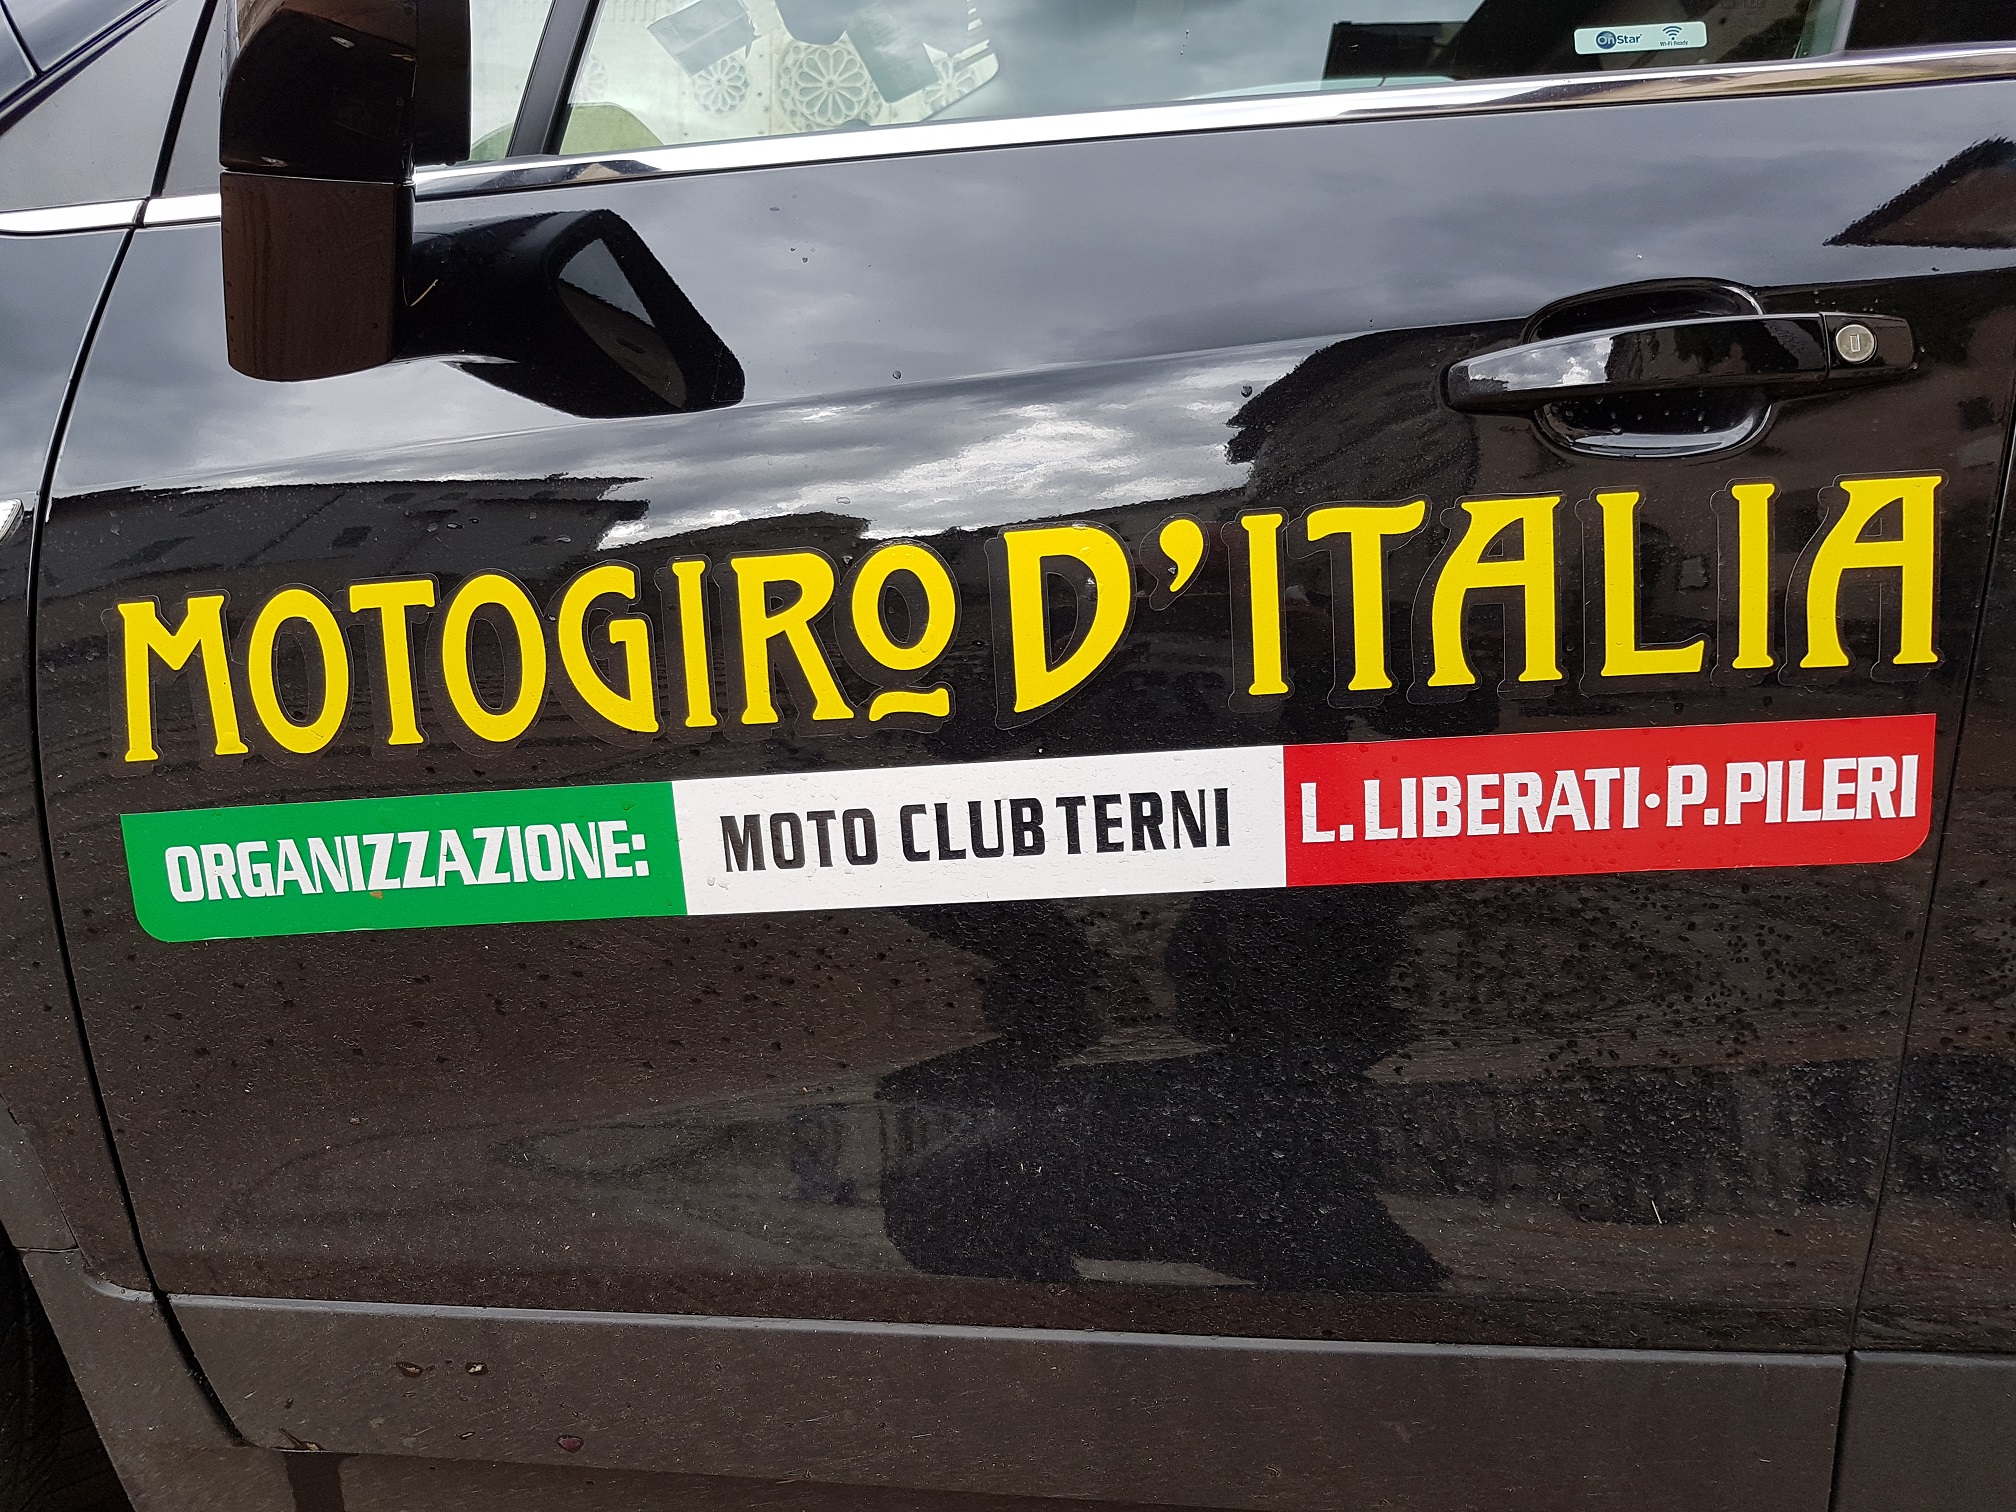 Club Terni Car.jpg